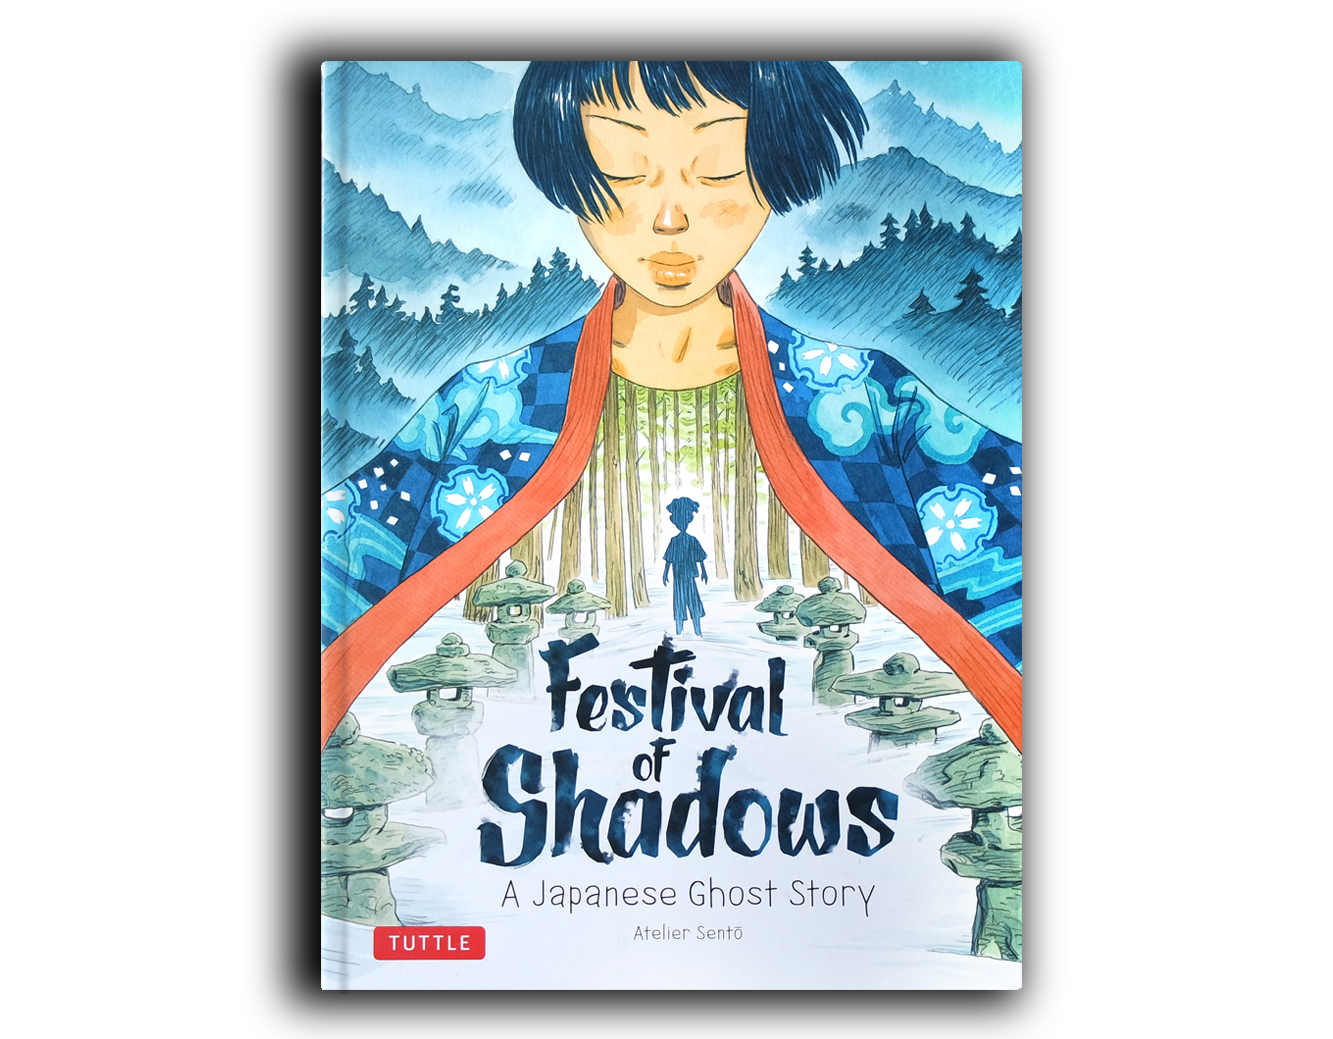 Festival of Shadows comic book cover